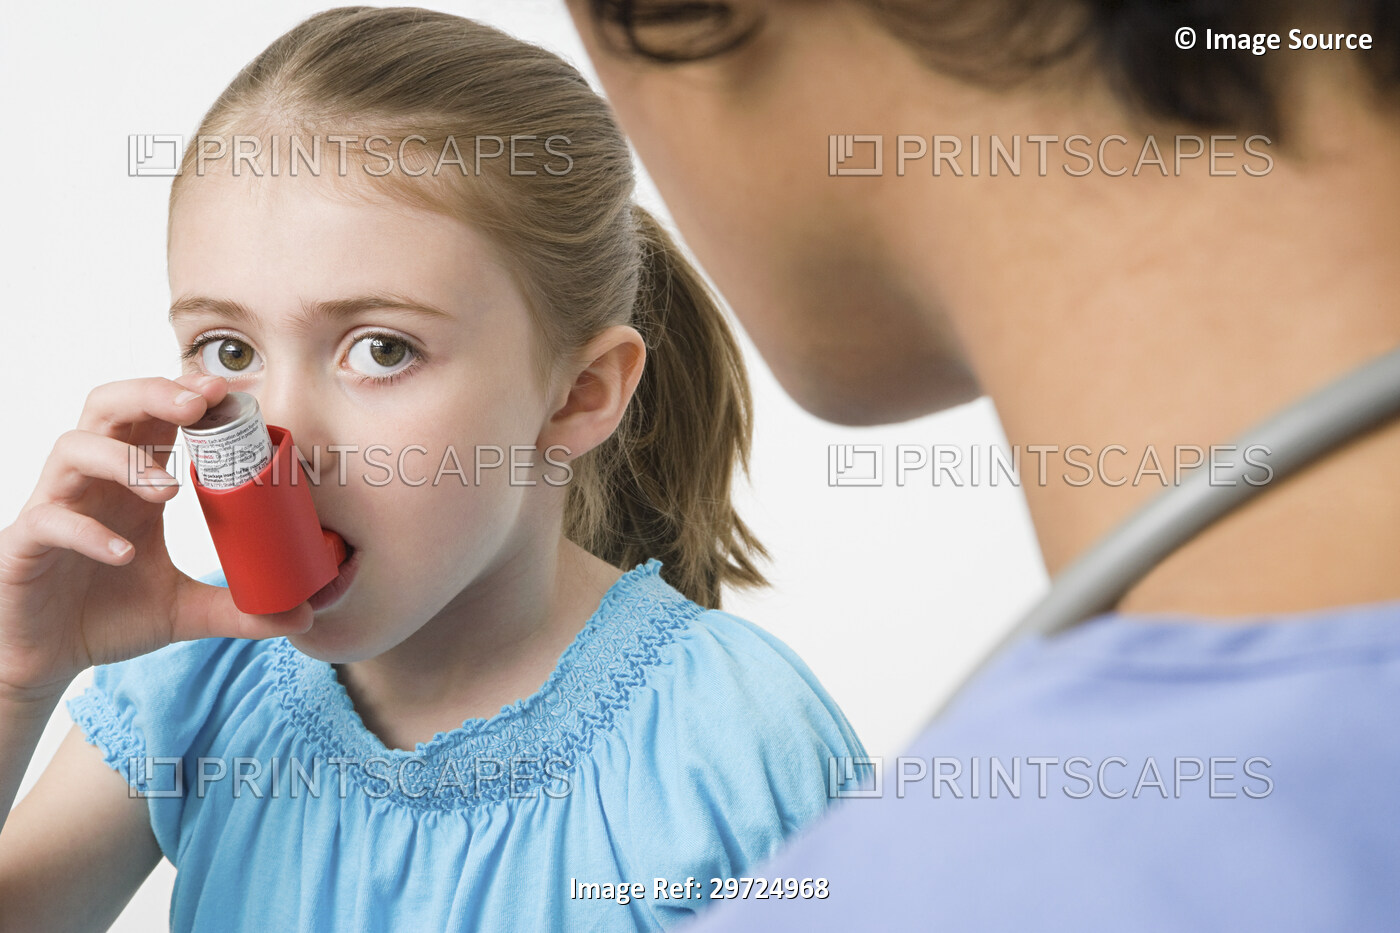 Girl taking asthma inhaler